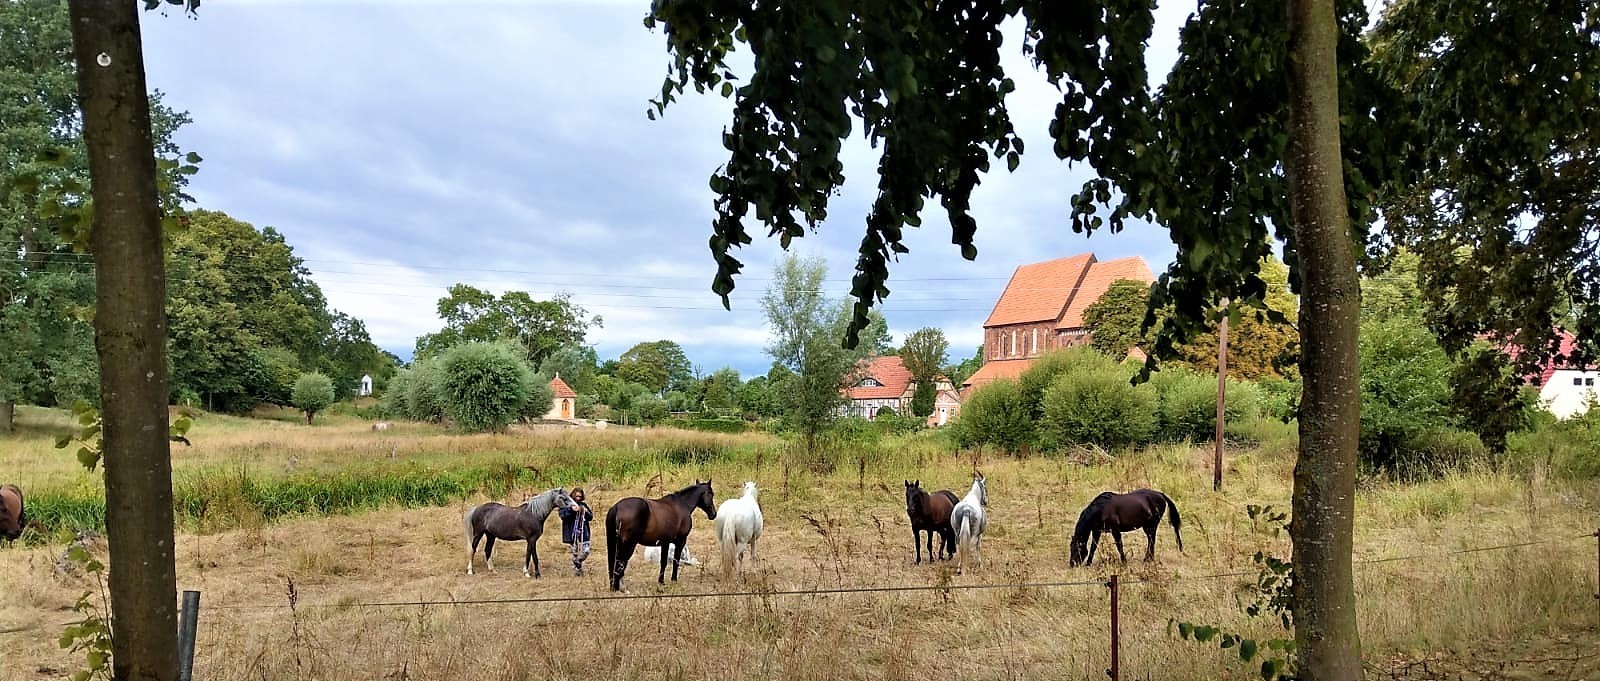 Pferdekoppel mit traumhafter Kulisse in Starkow